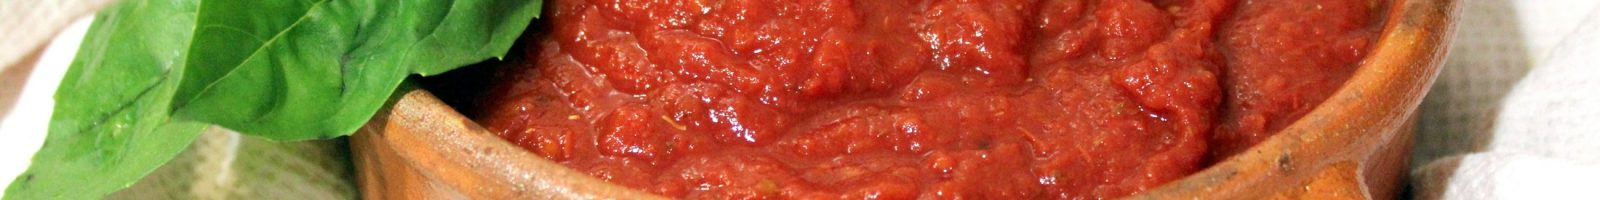 receta-de-salsa-de-tomate-para-pizza